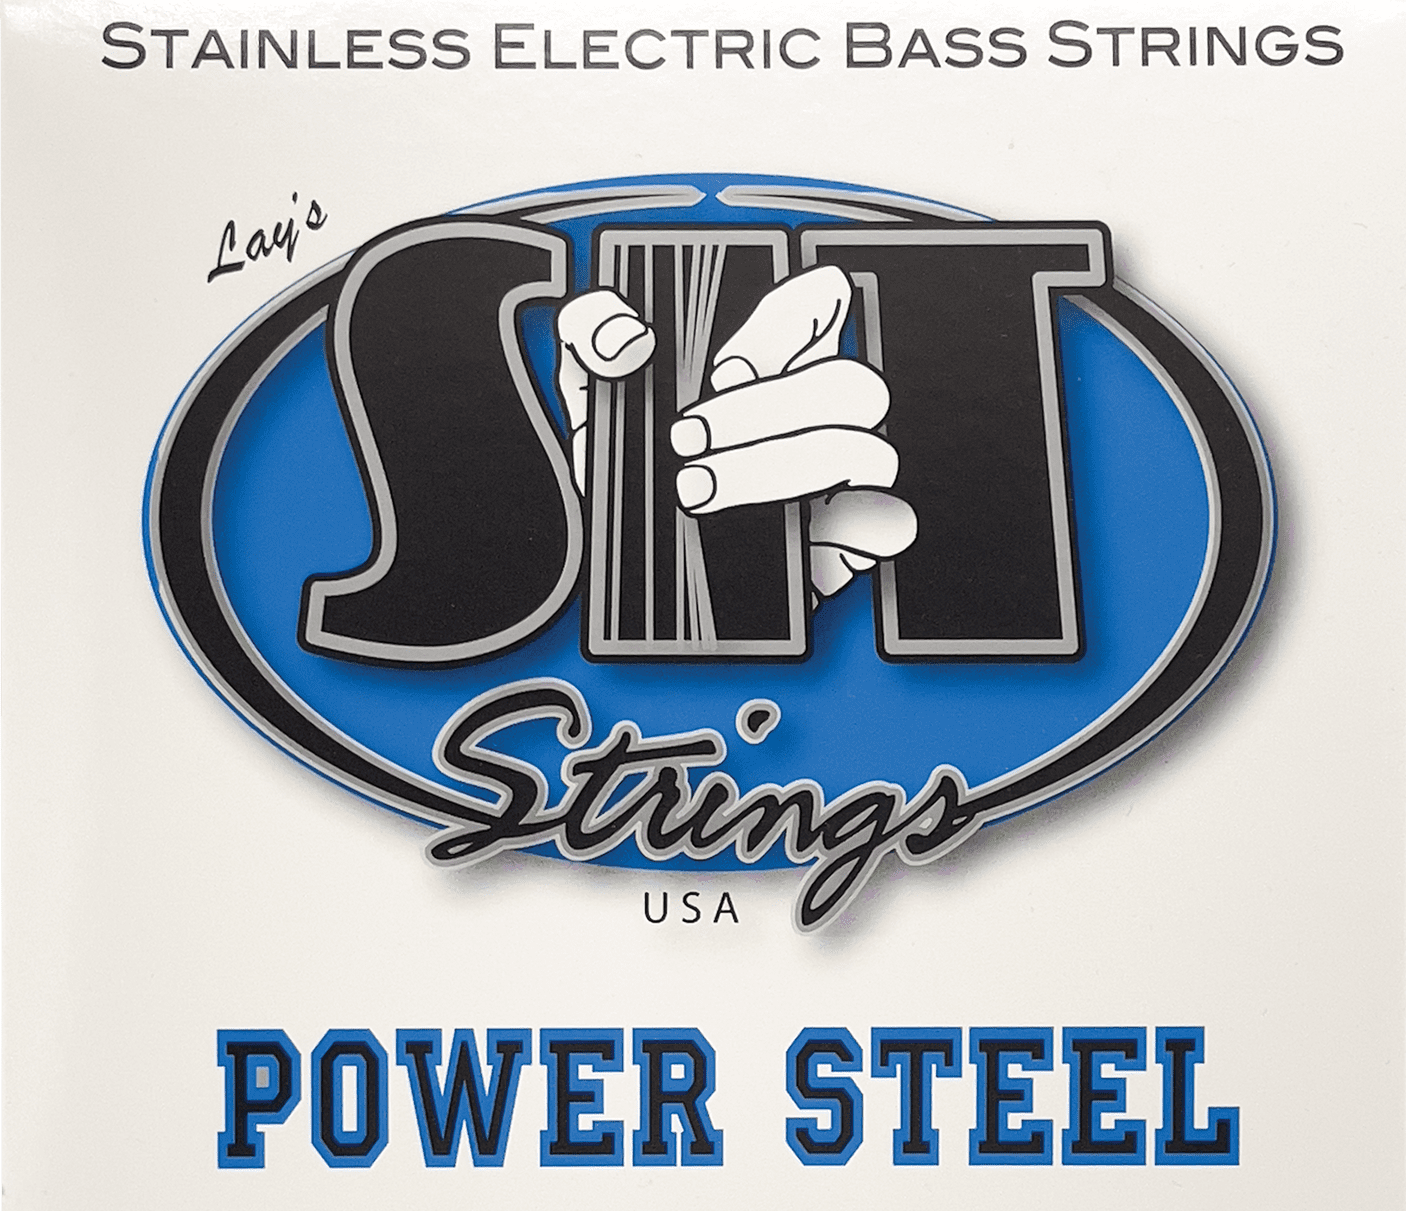 SIT POWER STEEL STAINLESS STEEL BASS - HIENDGUITAR PSR81895L 8-STRING OCTAVE 18-95 PSR81895L 8-STRING OCTAVE 18-95 SIT Bass Strings